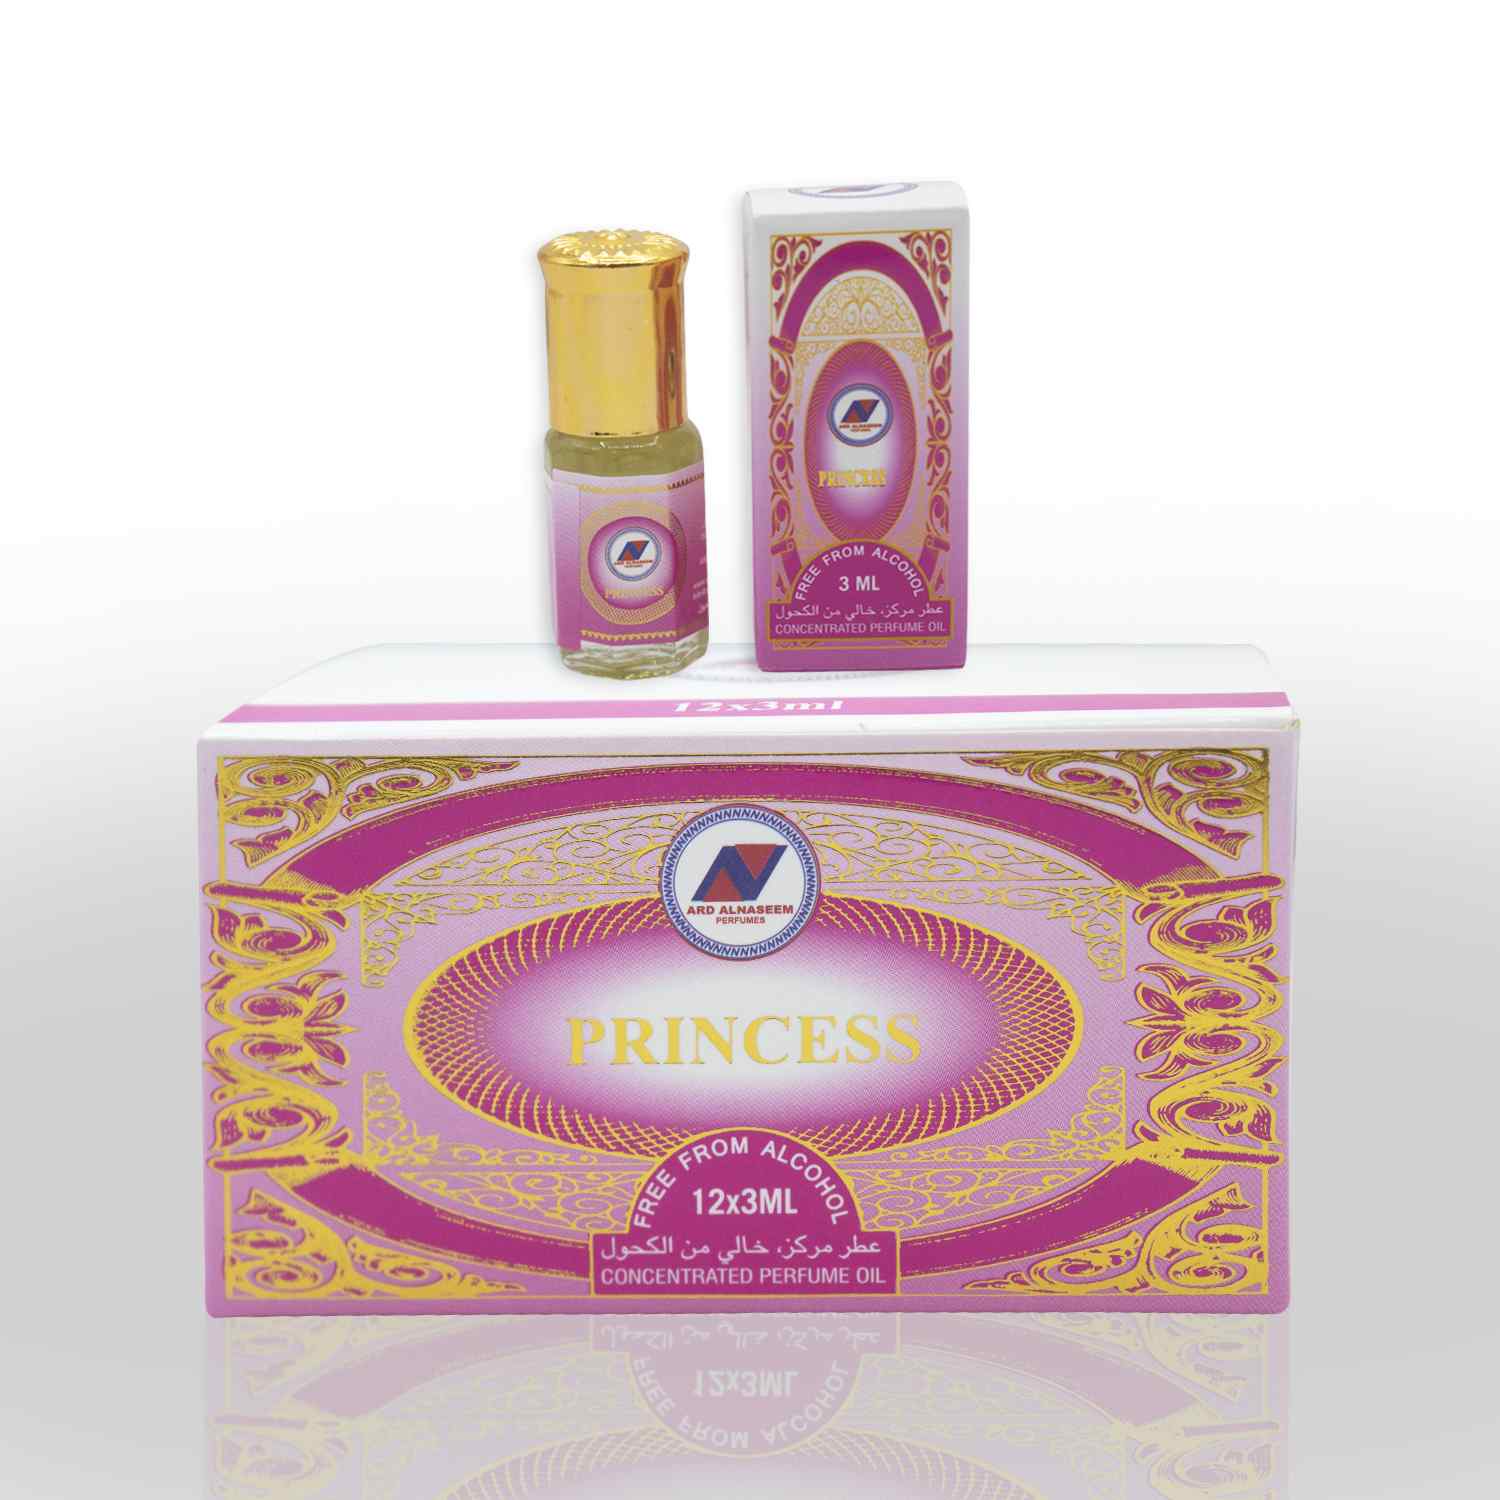 Princess-3ml-Rollan-Attar-by-ARD-perfumes